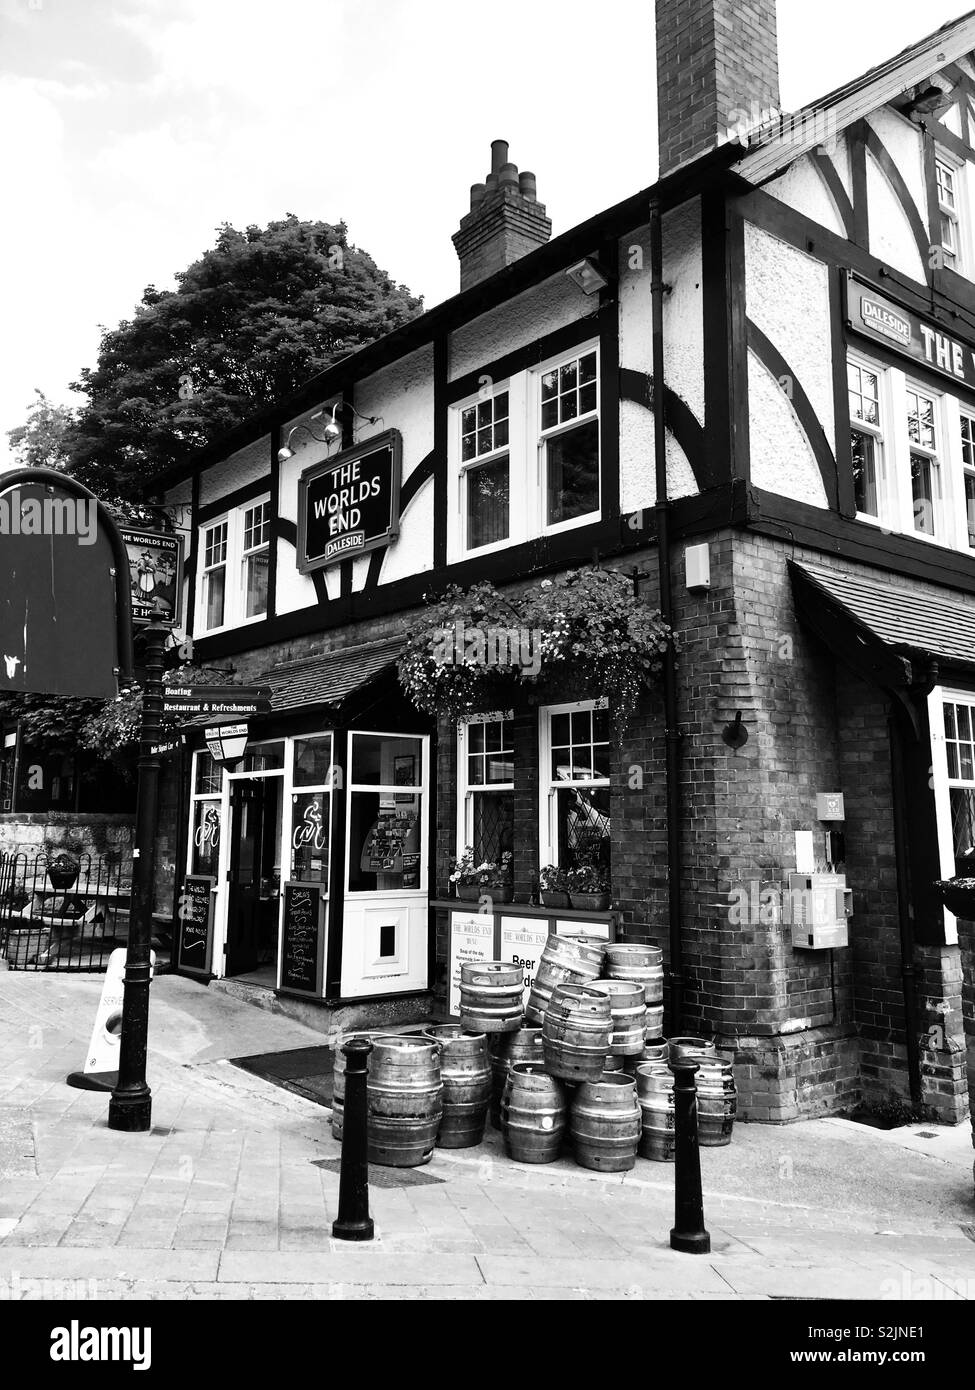 The Worlds end pub in knaresborough, Yorkshire Stock Photo